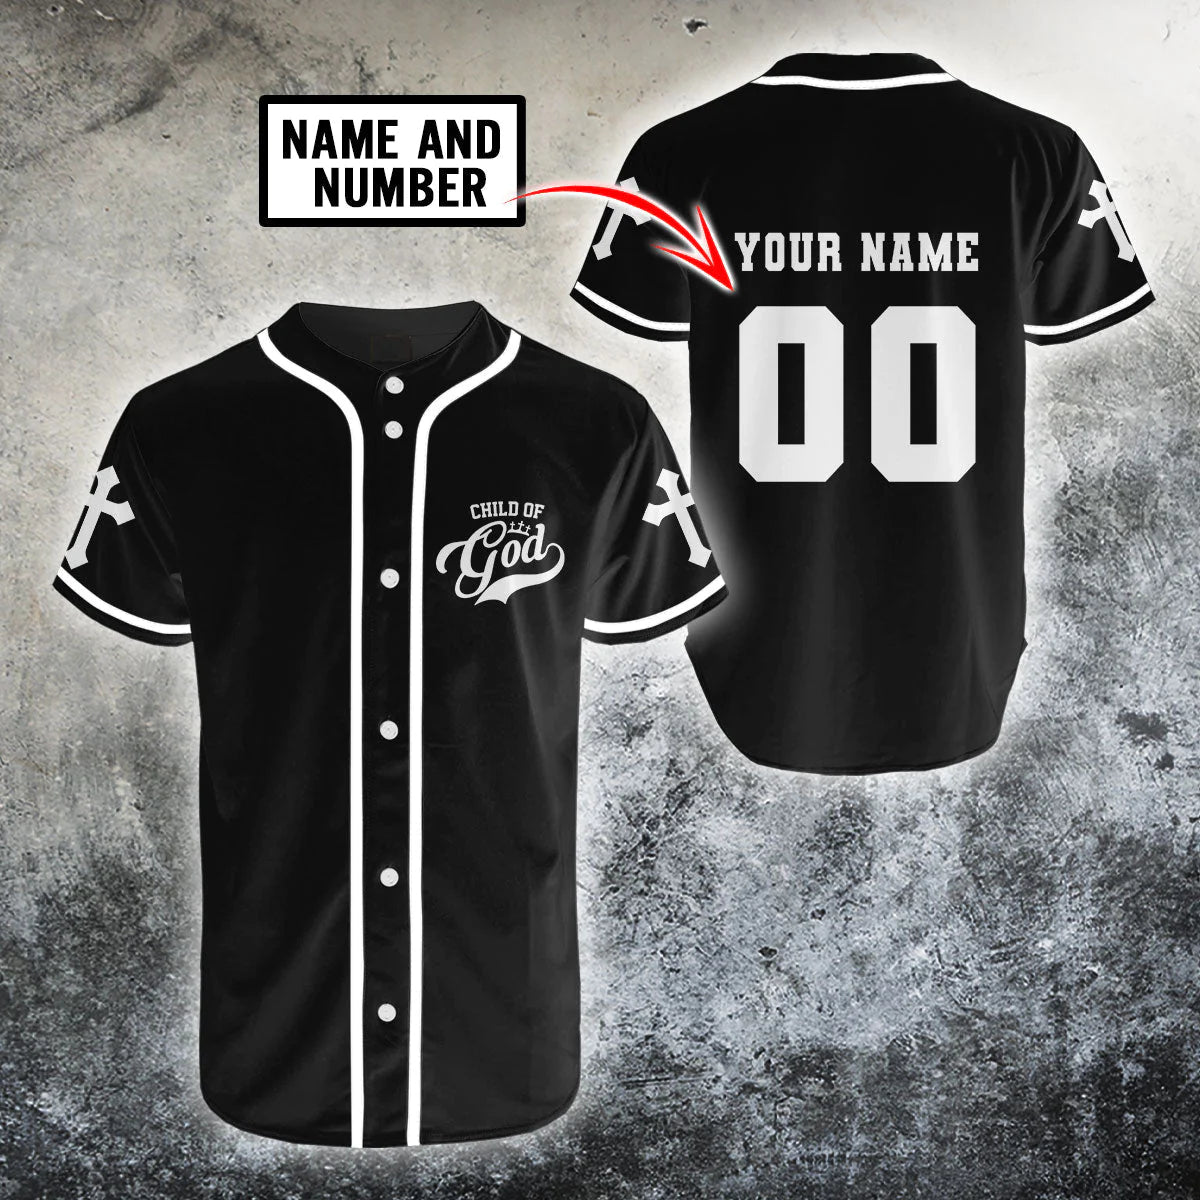 Personalized Jesus Baseball Jersey - Cross Baseball Jersey - Gift For Christians - Child Of God Custom Printed 3D Baseball Jersey Shirt For Men Women